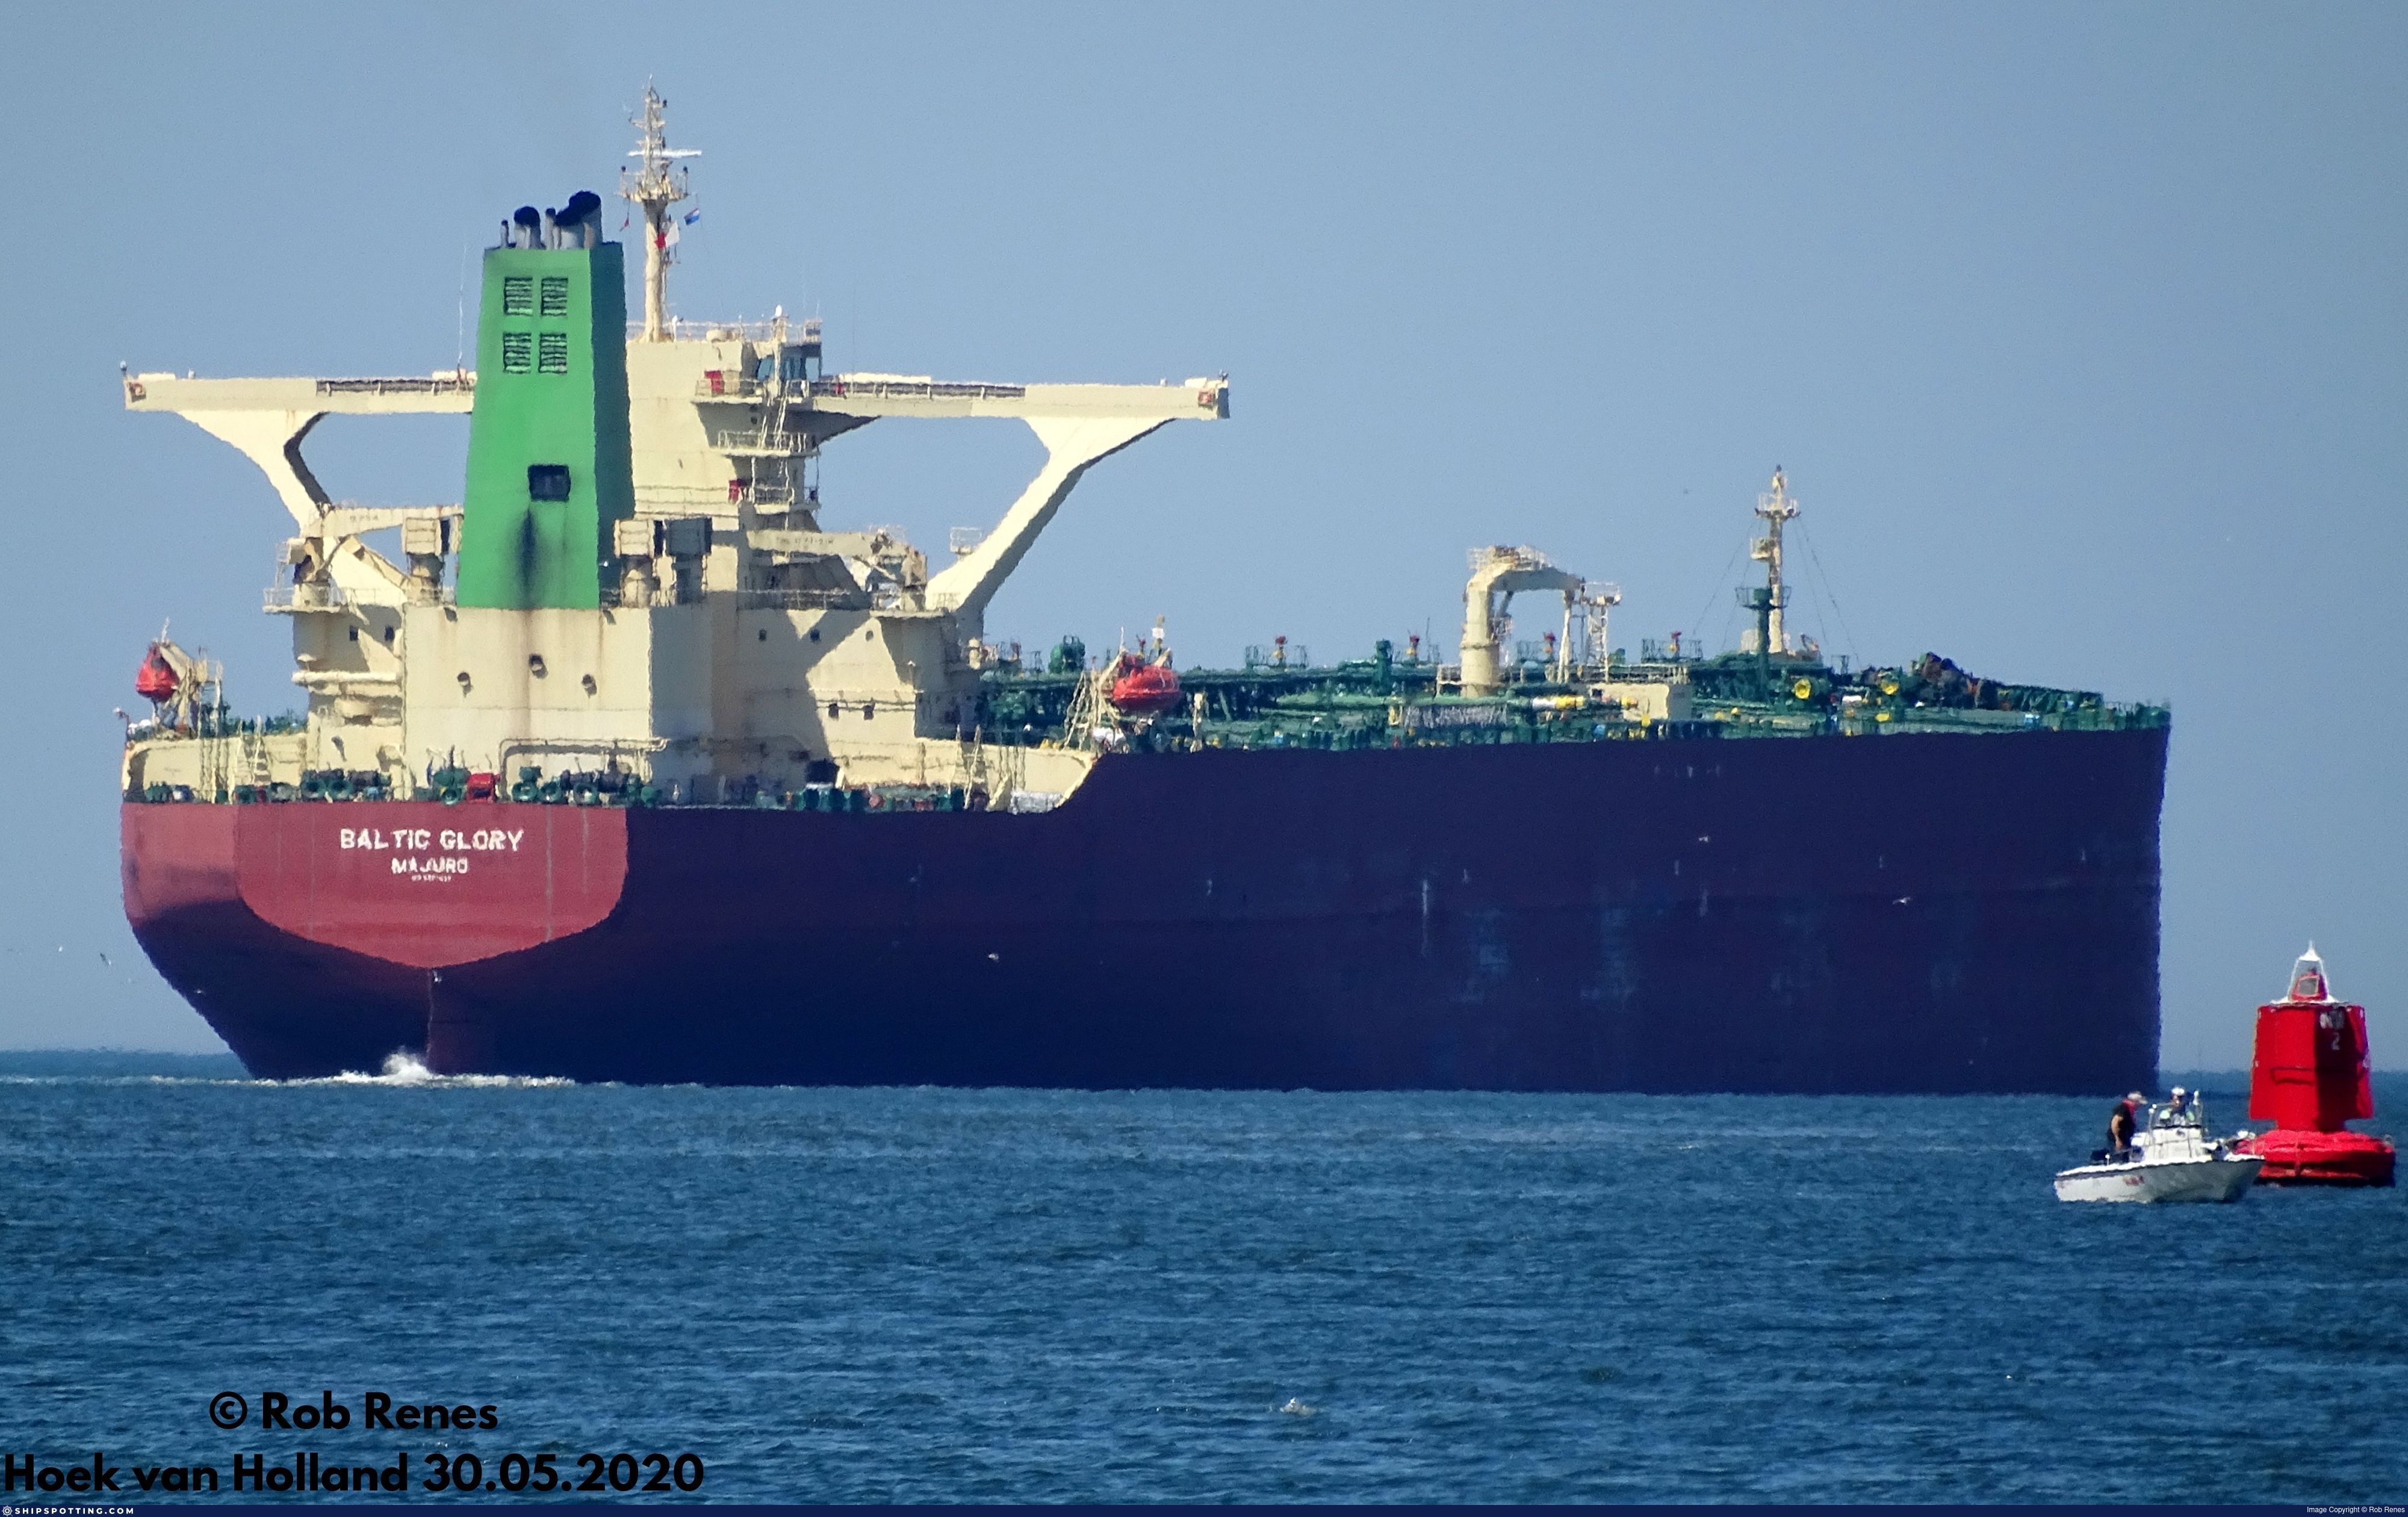 Baltic Glory - IMO 9307645 - ShipSpotting.com - Ship Photos, Information,  Videos and Ship Tracker